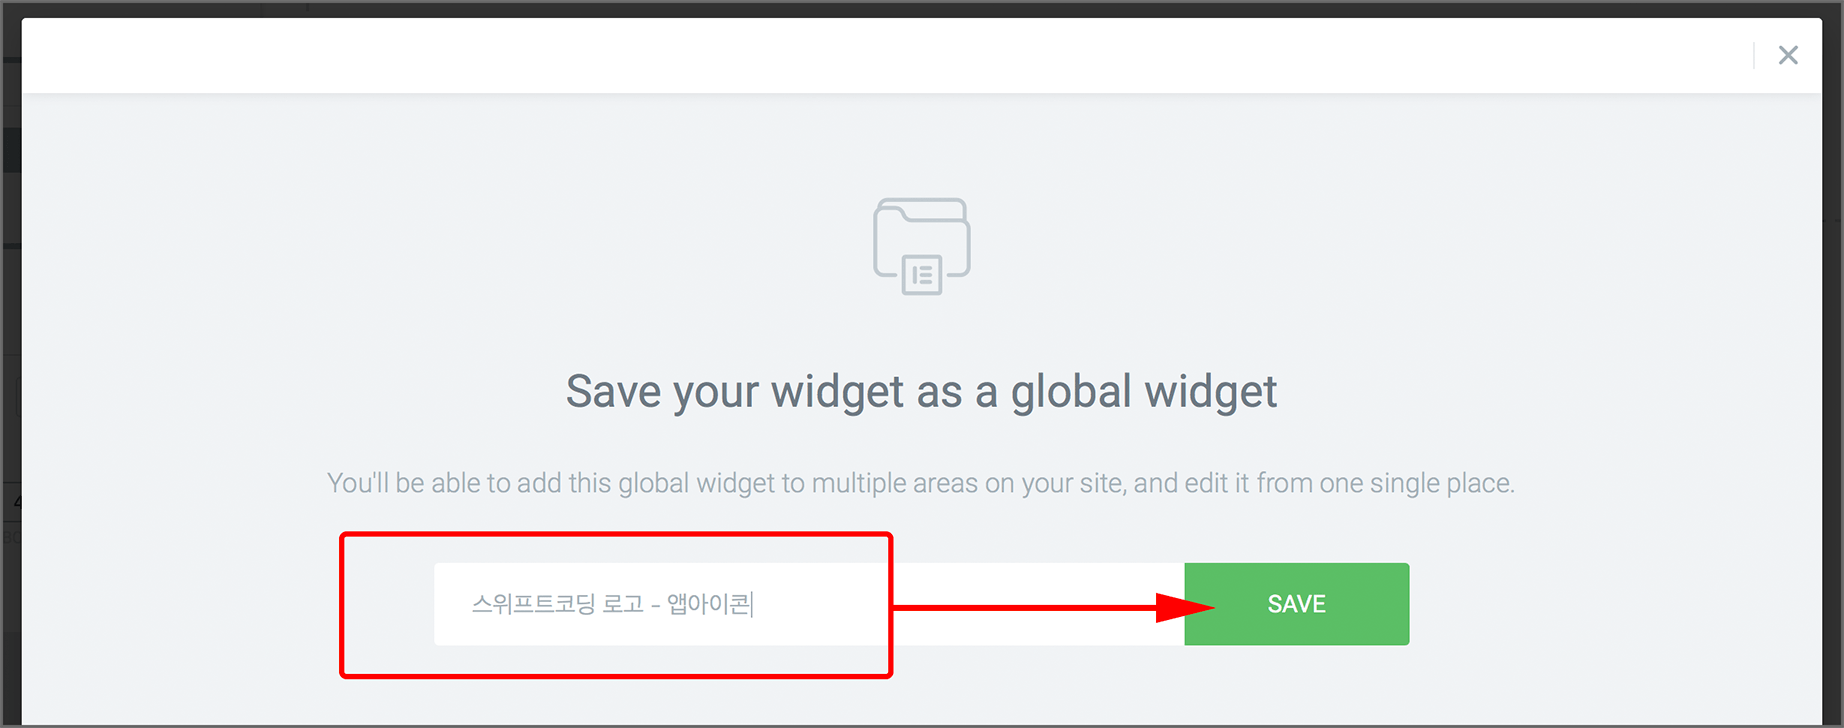 save your widget as a global widget 문구와함께 제목입력란, save 버튼